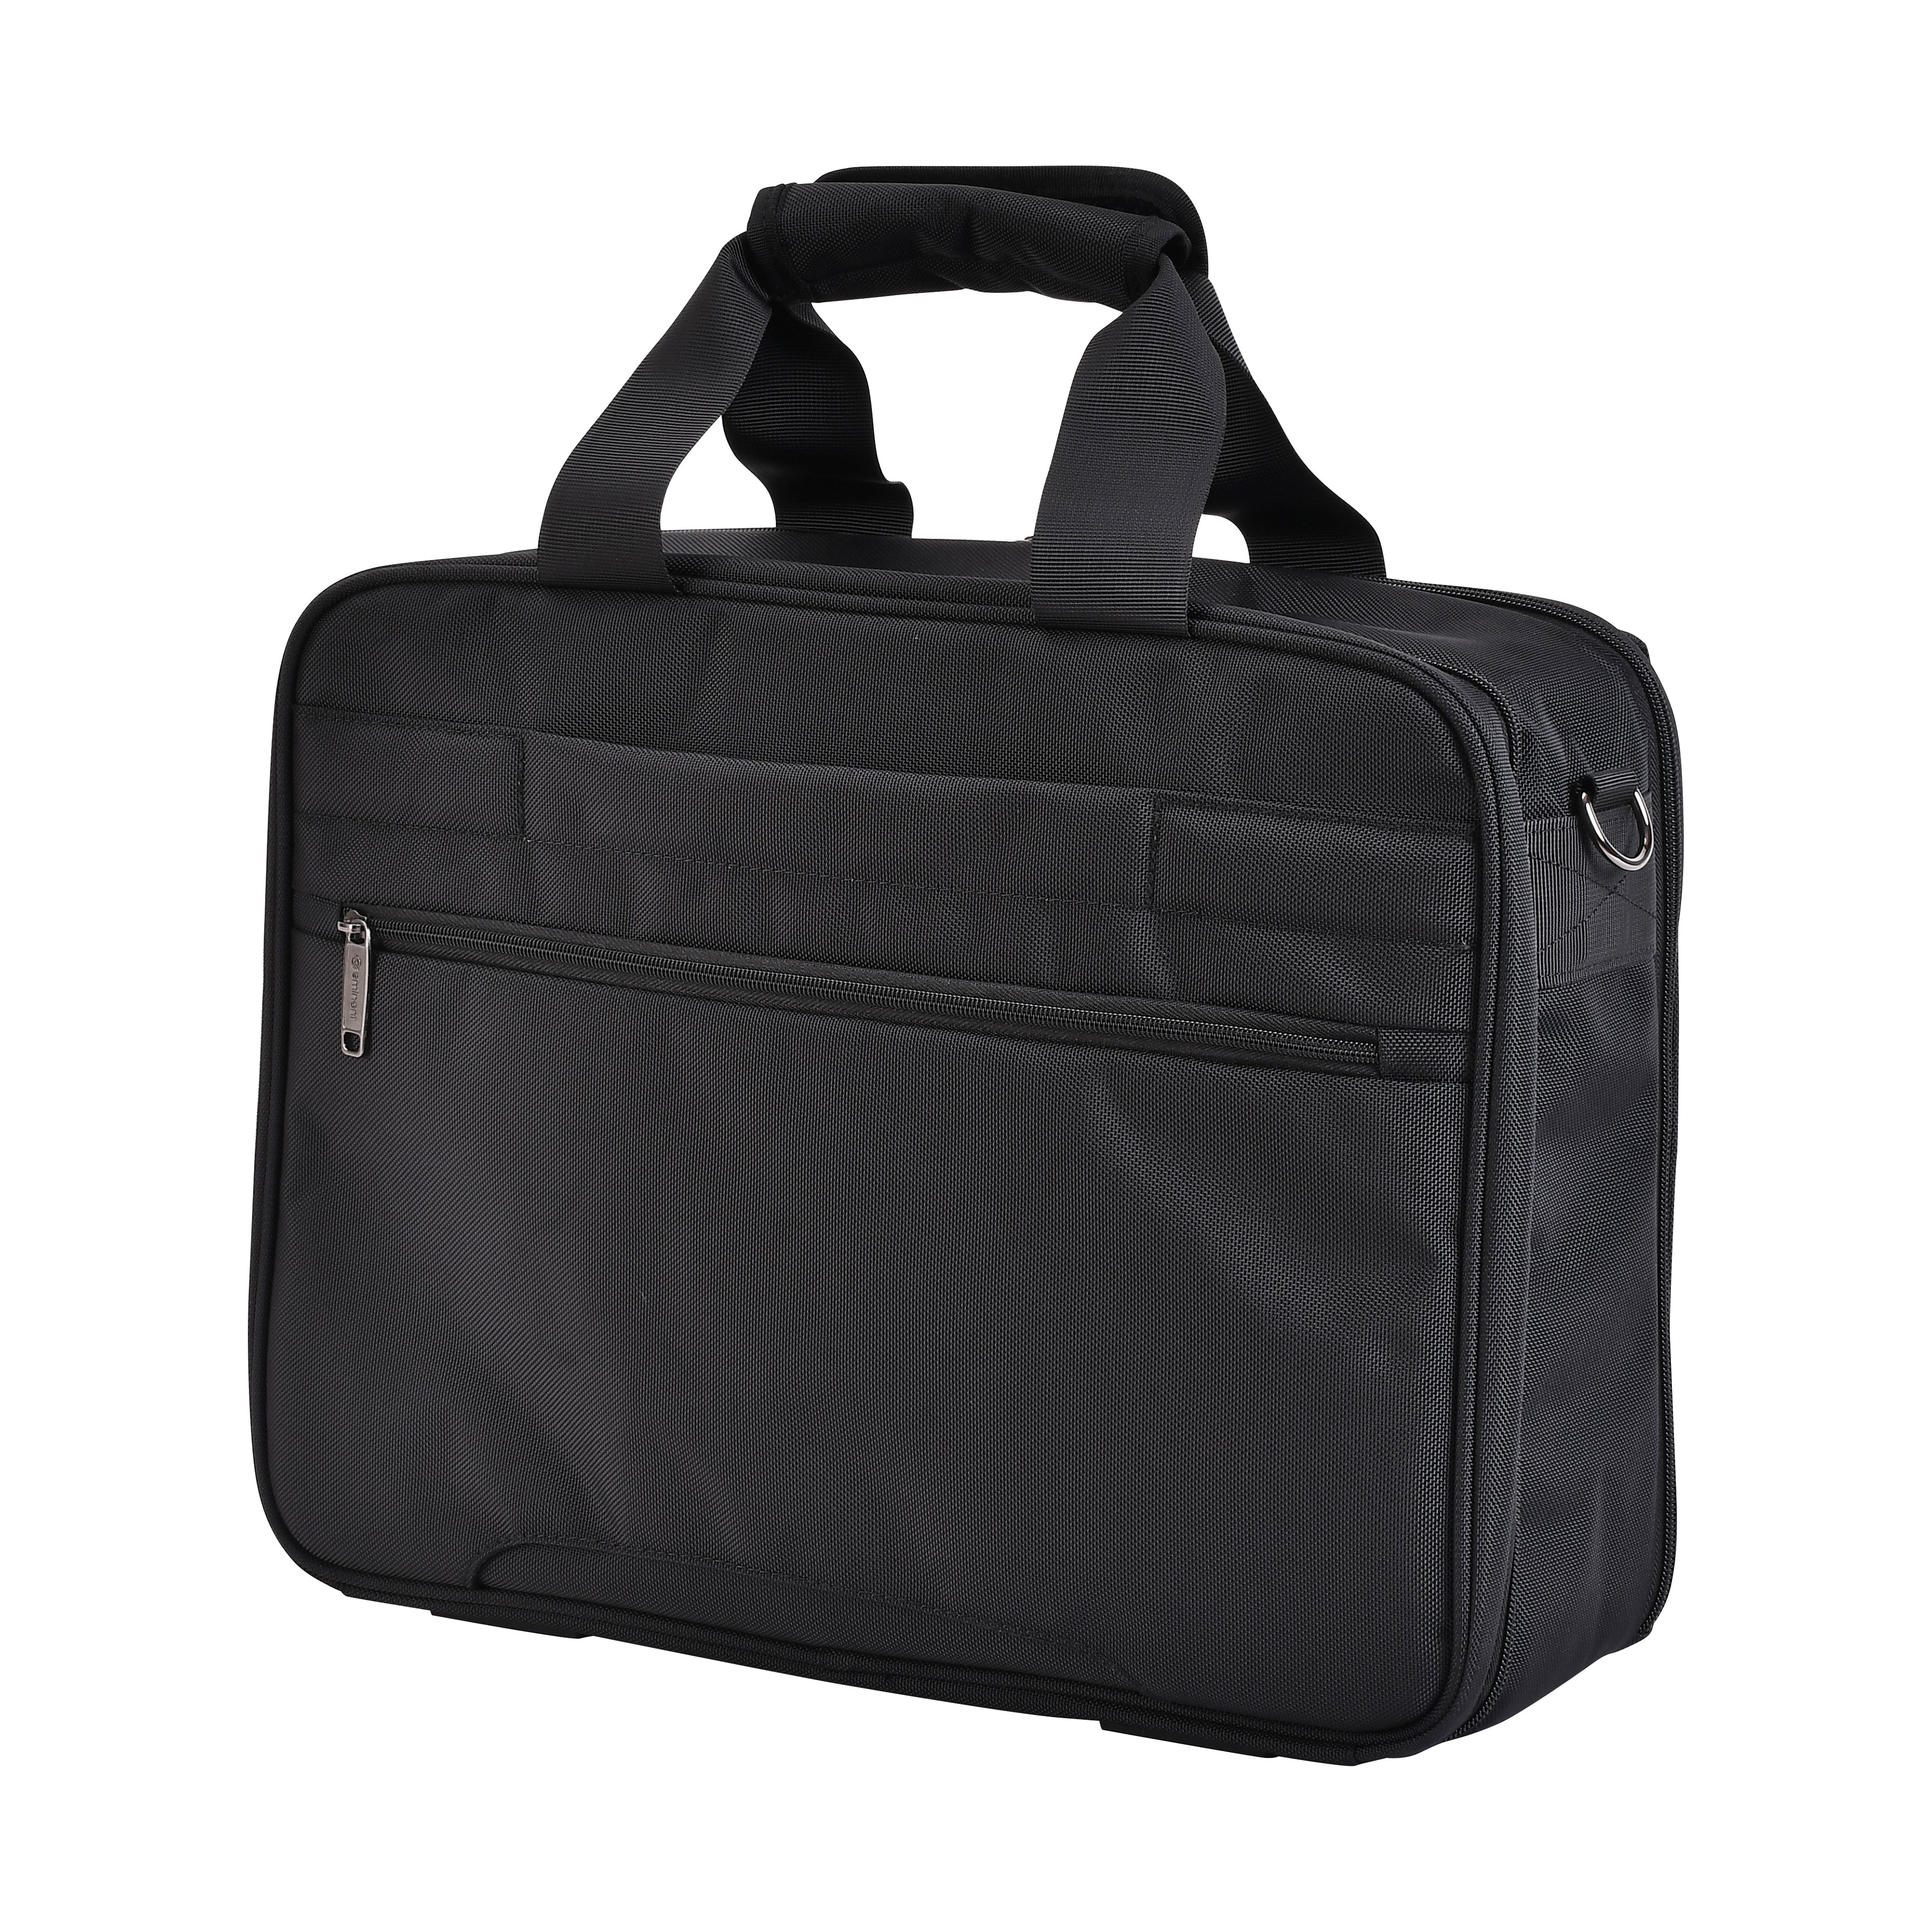 Eminent Premium 17inch Shoulder Business Laptop Bag Polyester Light Weight 180° Opening Business Laptop Case for Men Women on Travel Business, V322-17